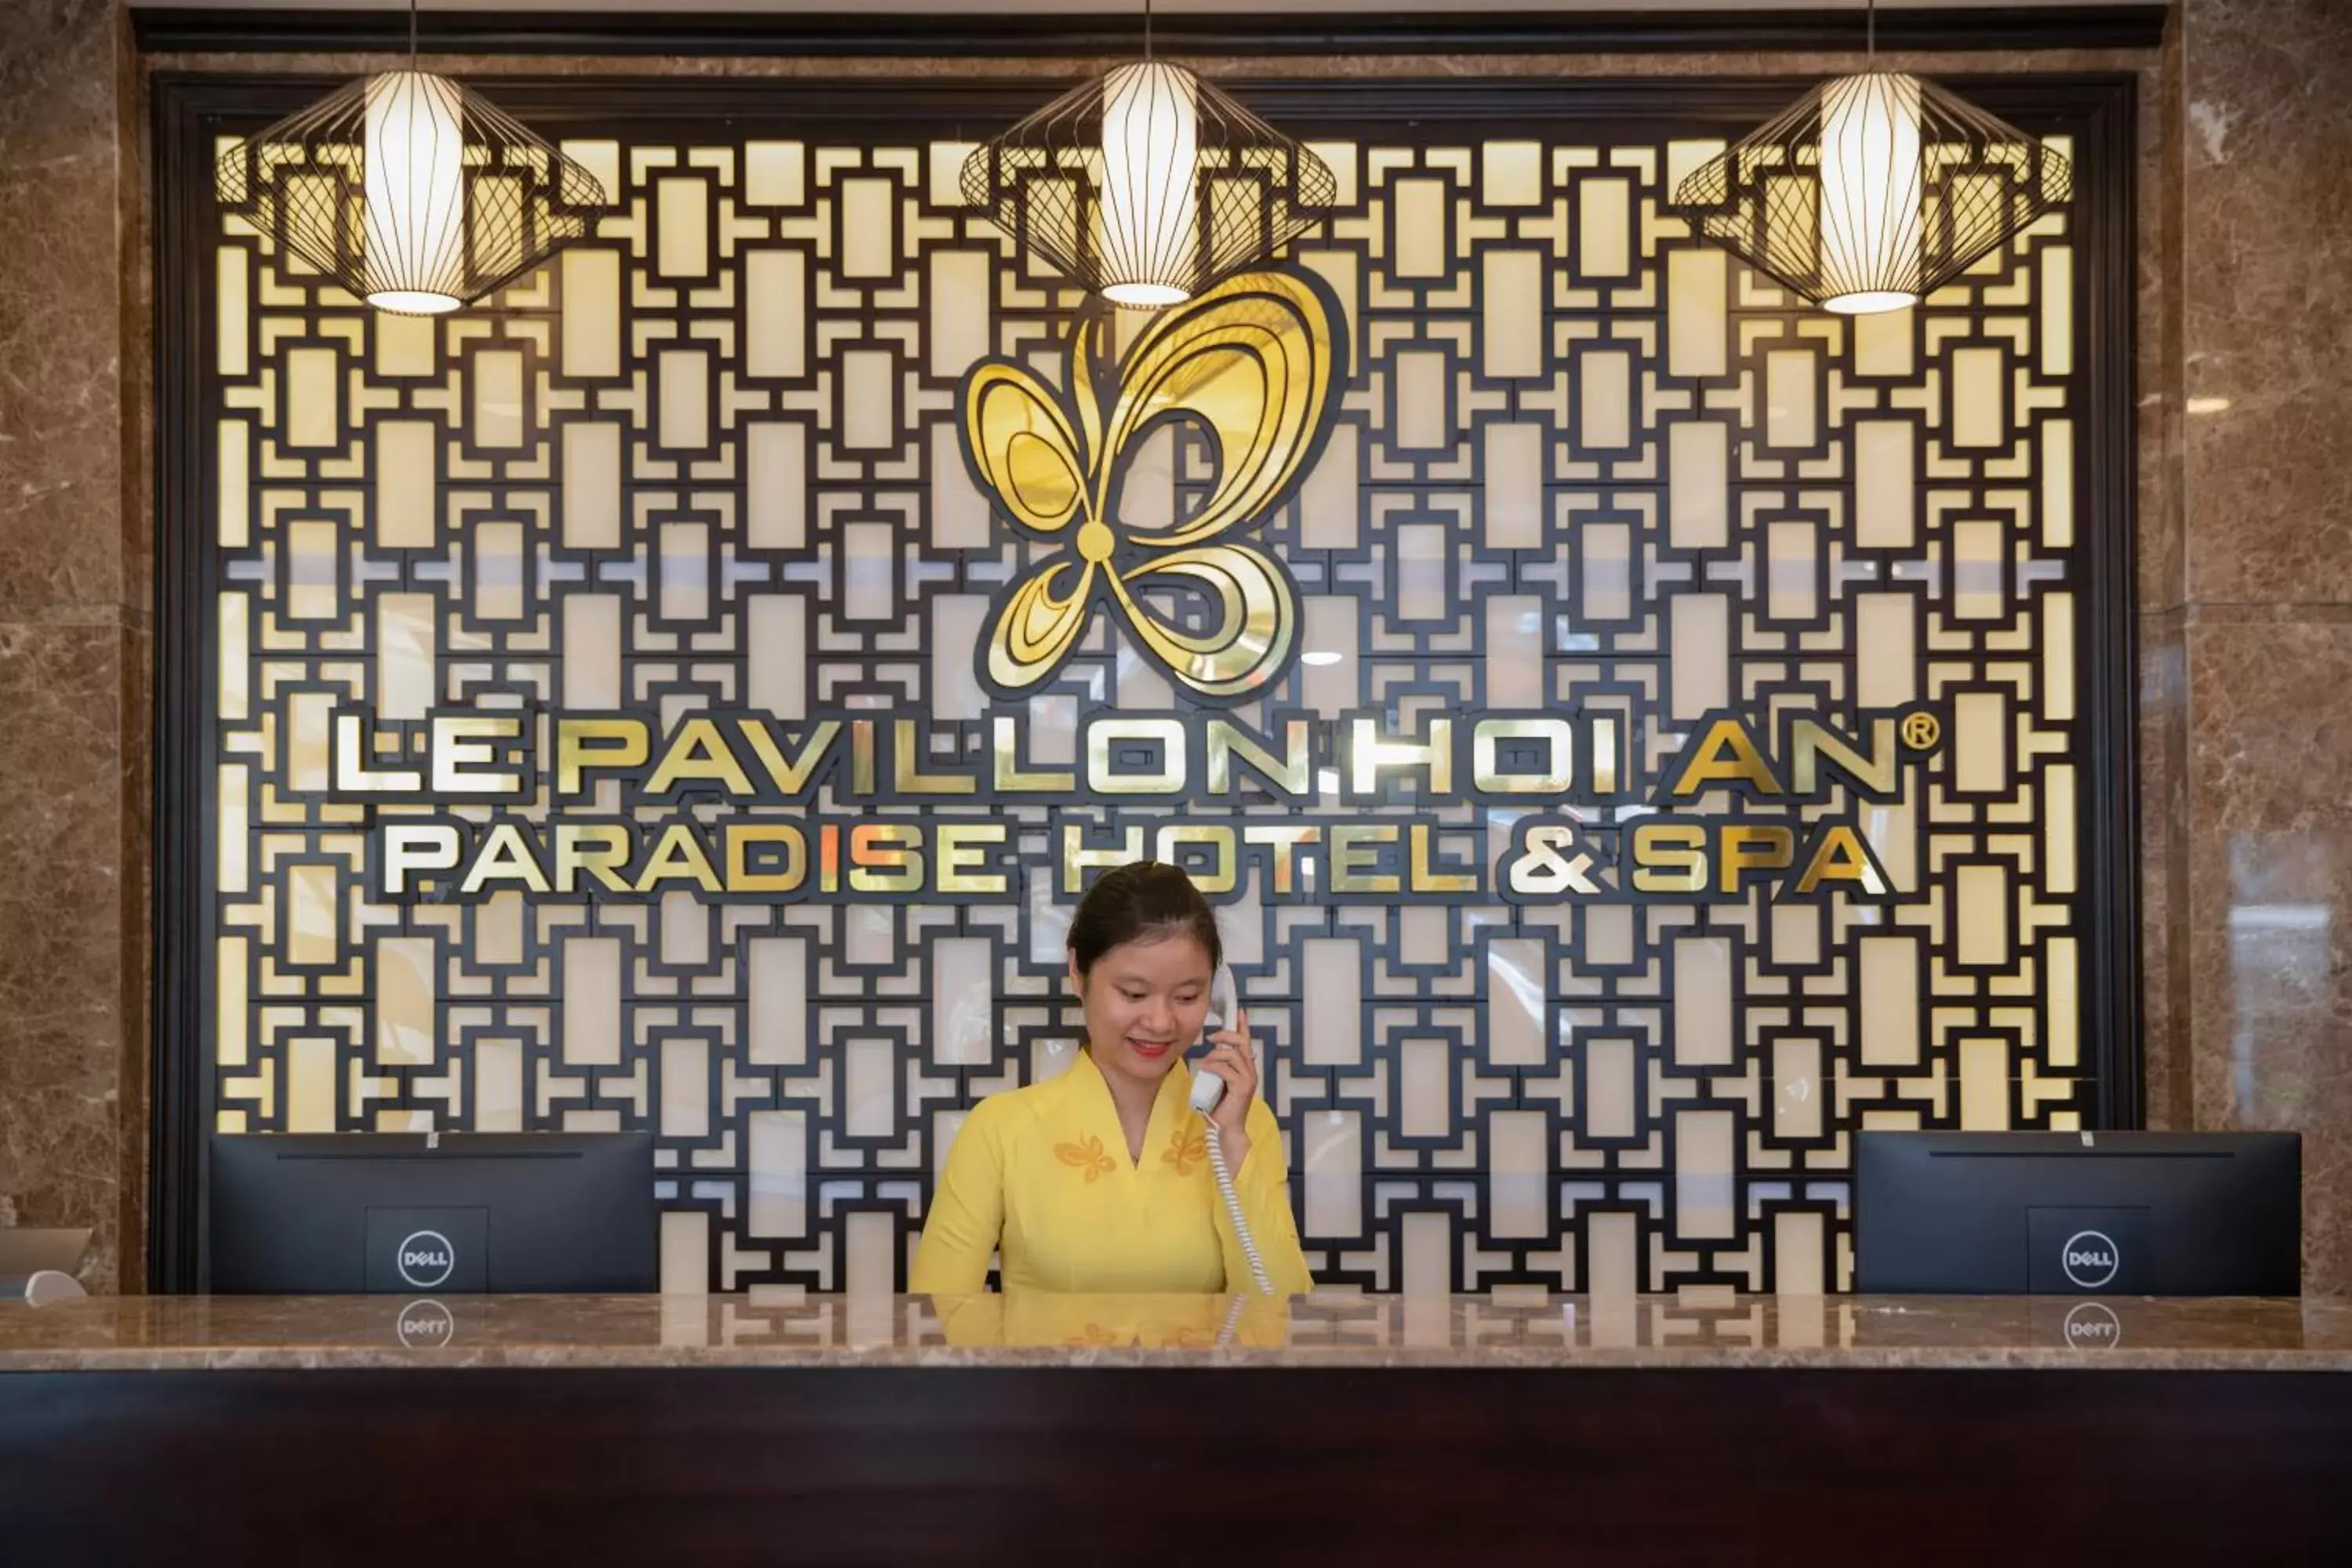 Staff in Le Pavillon Hoi An Paradise Hotel & Spa